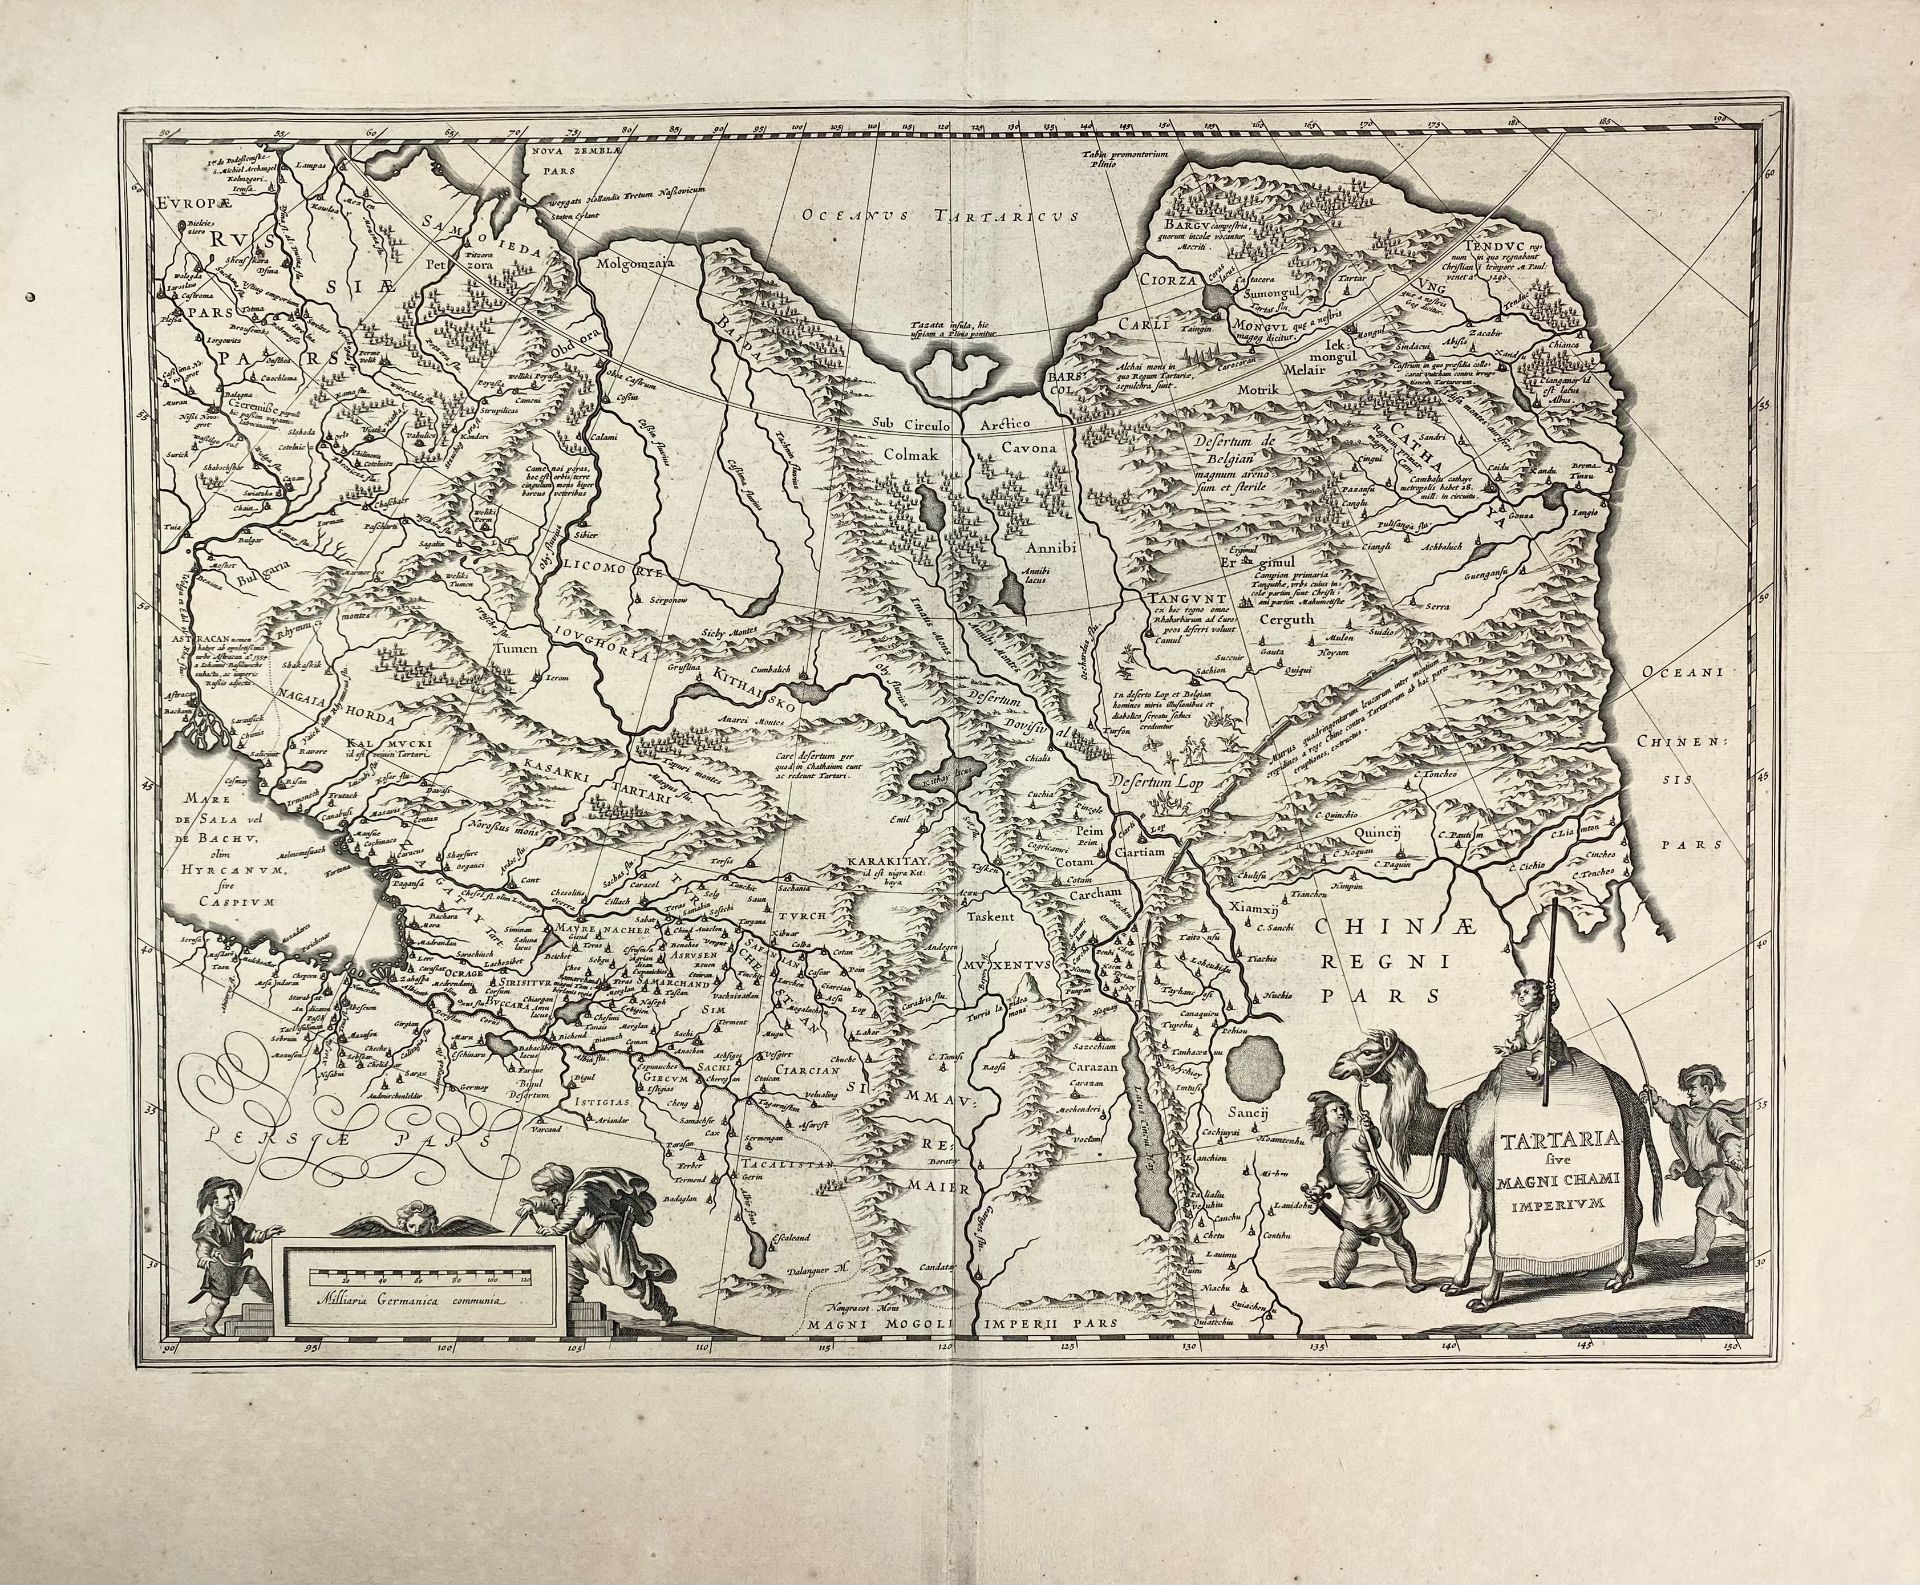 ASIA -- "TARTARIAE SIVE MAGNI CHAMI REGNI". (Amst., J. & G. Blaeu, c. 1640